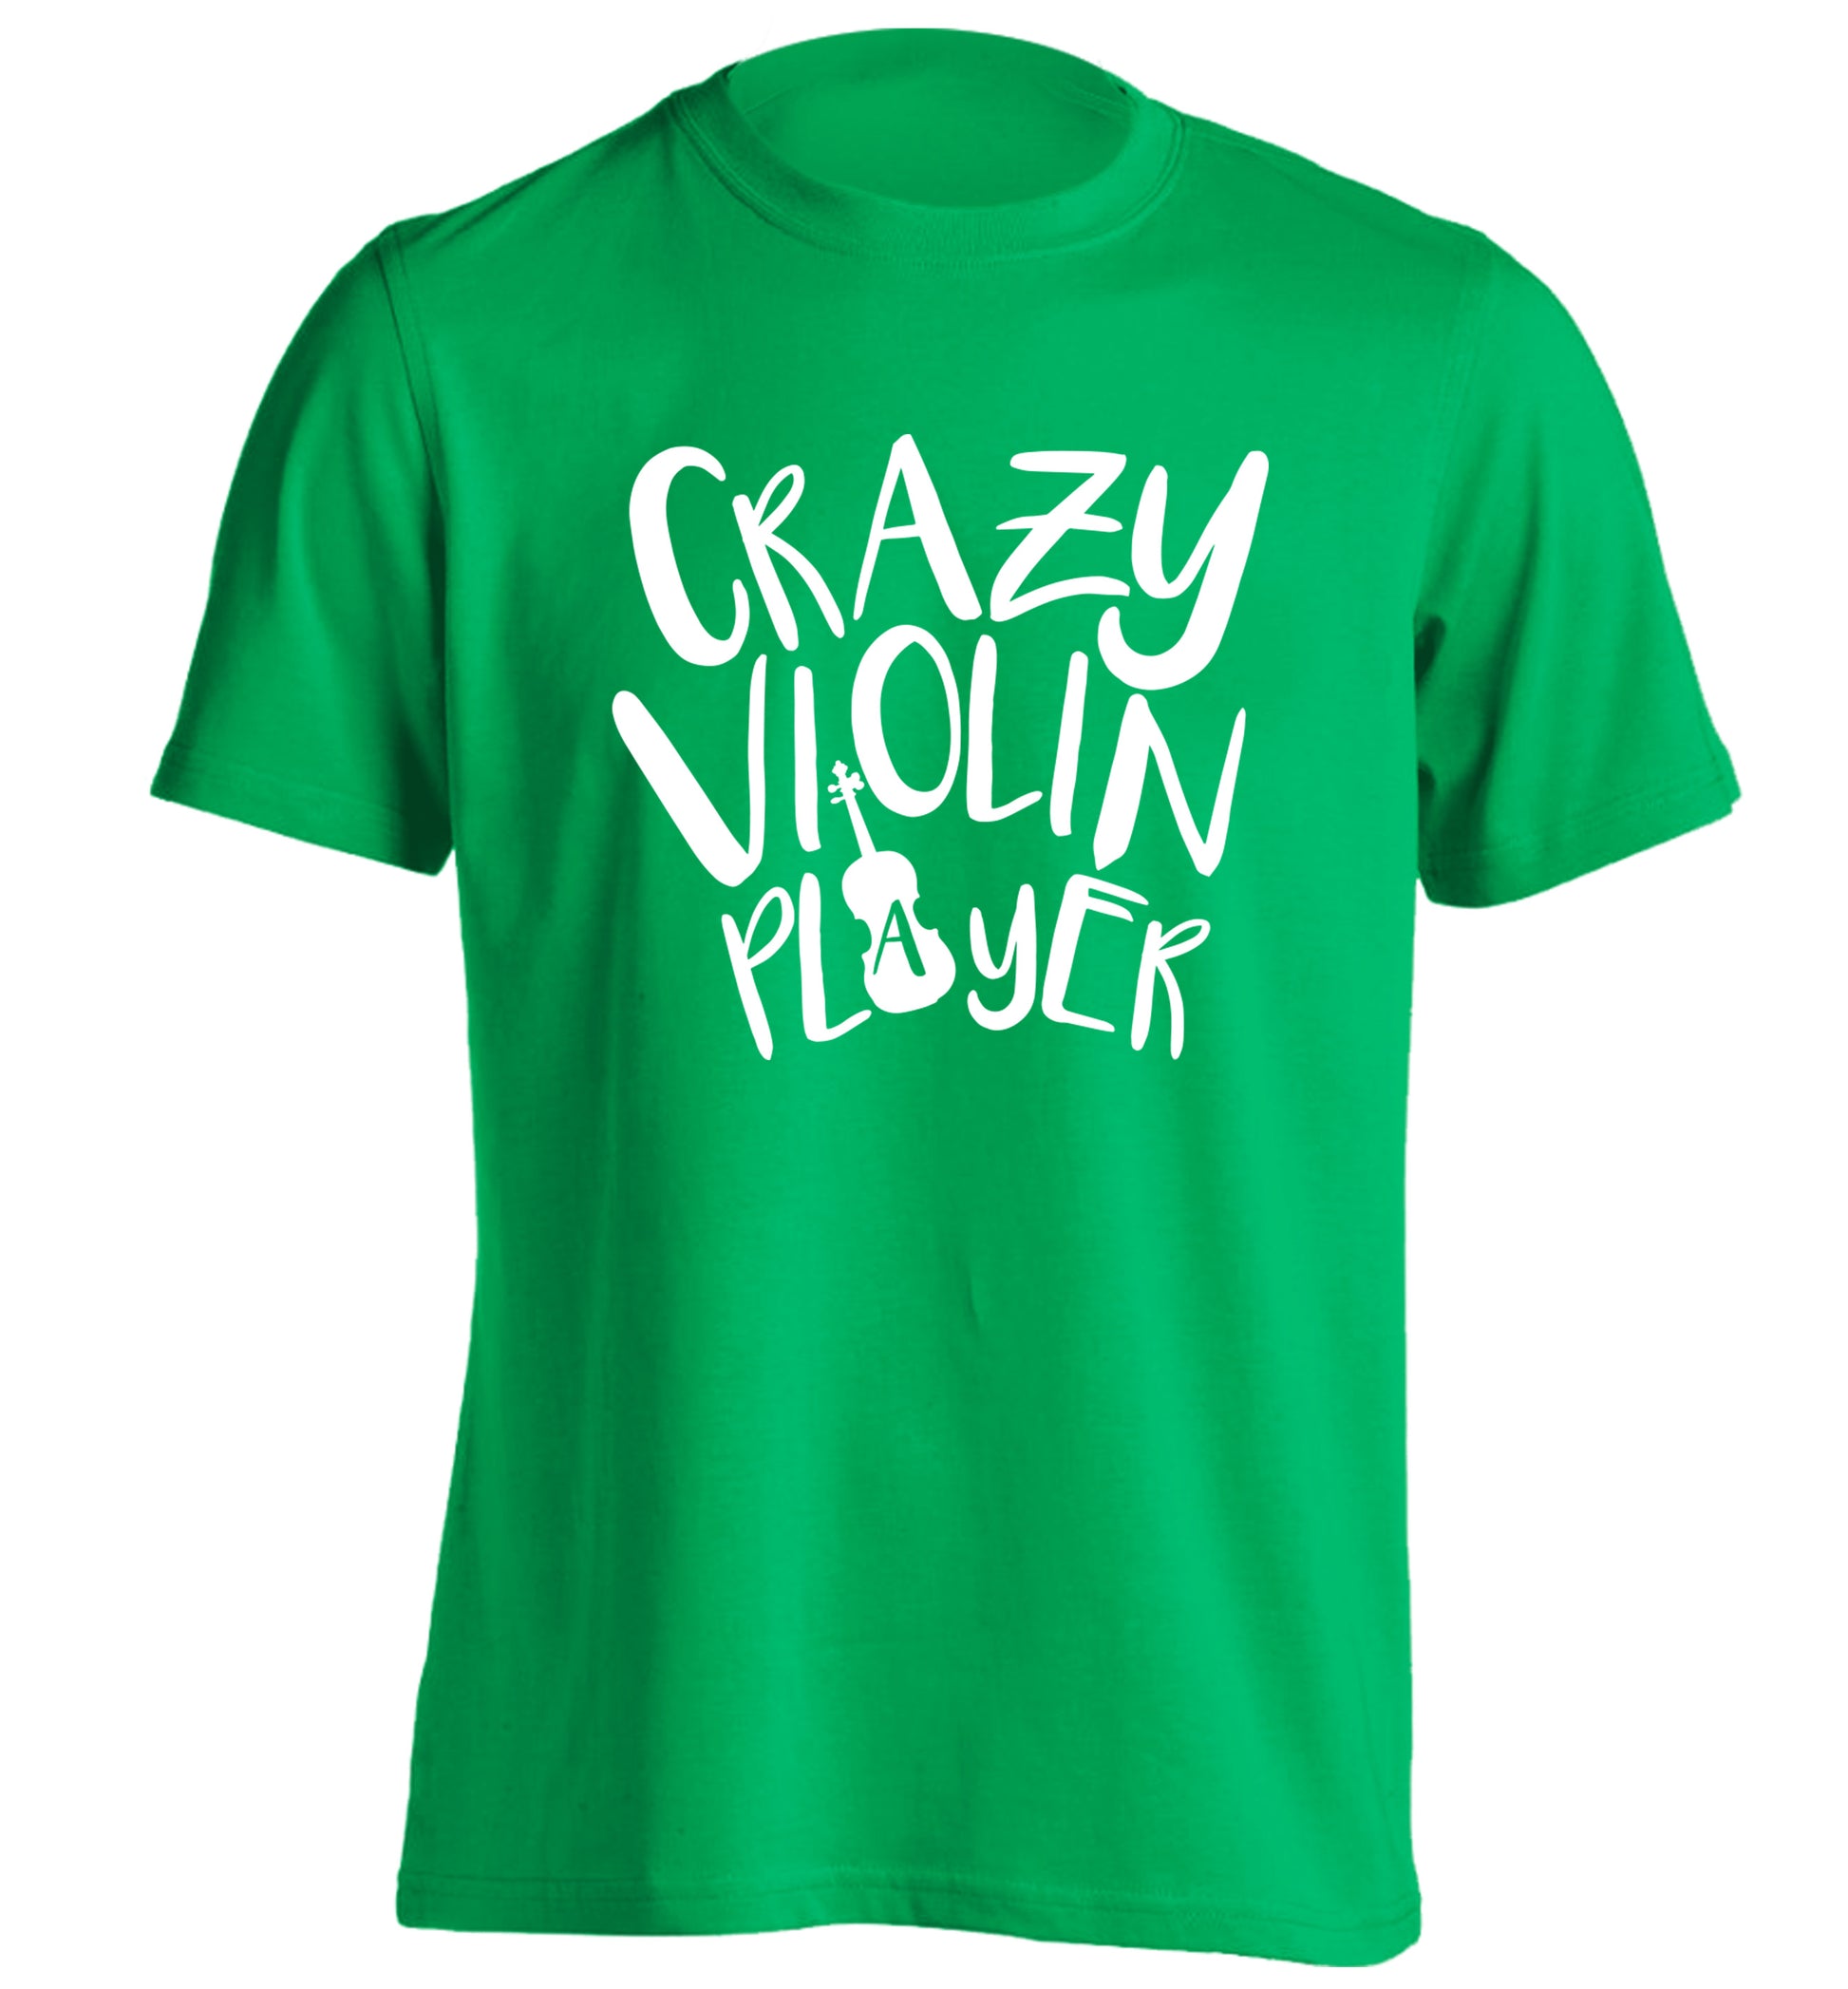 Crazy Violin Player adults unisex green Tshirt 2XL